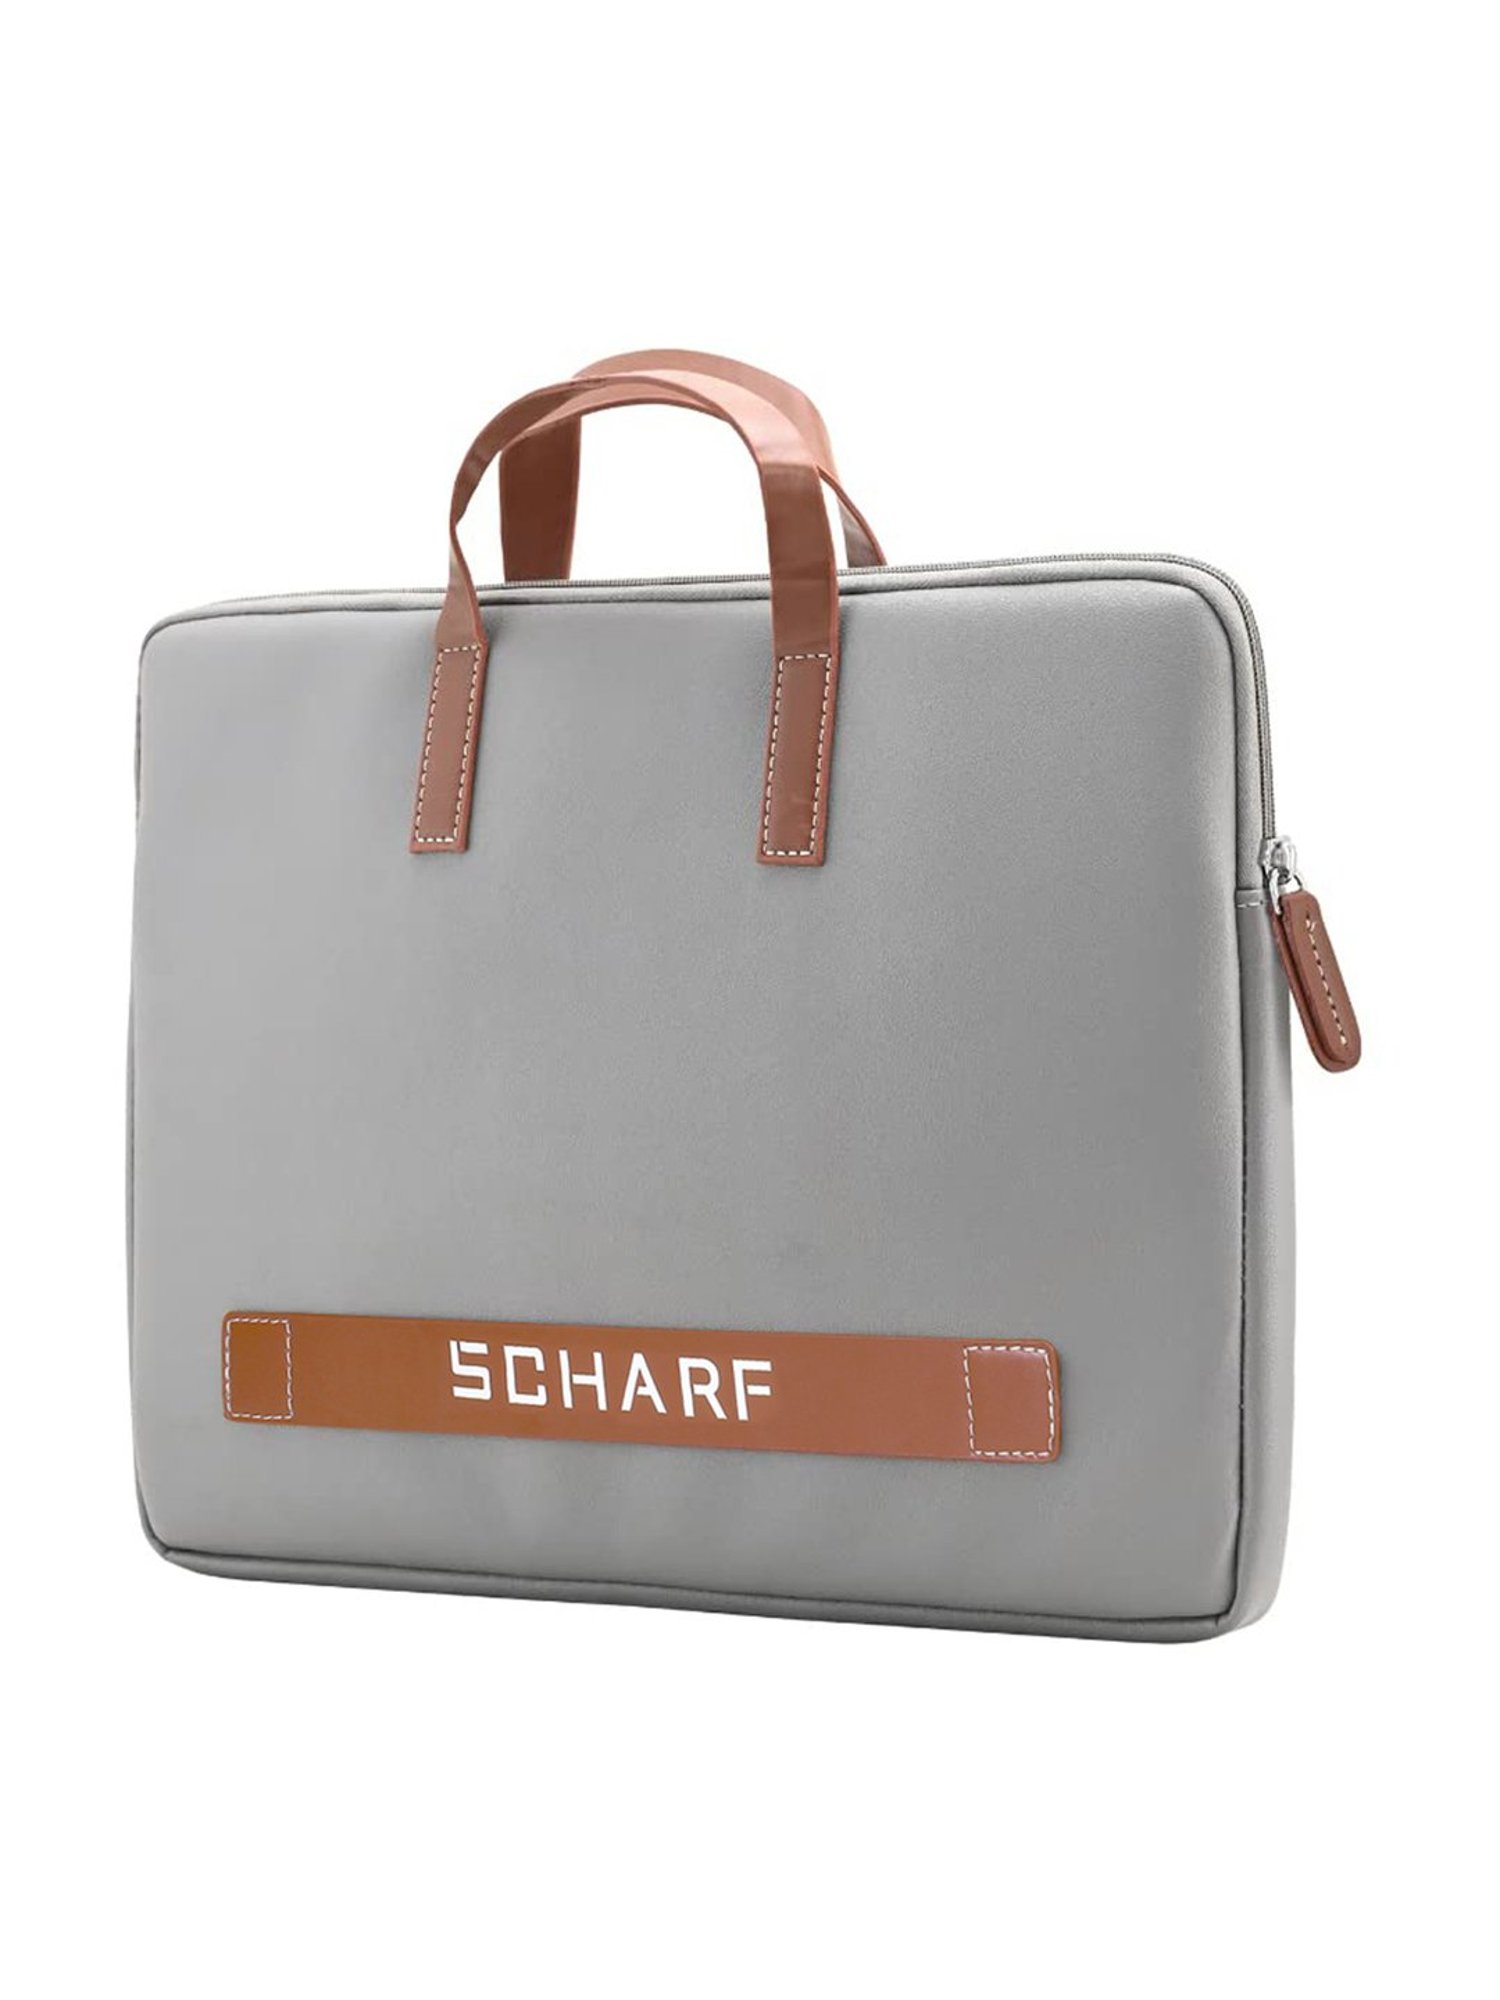 Dior Saddle bag Kenny Scharf collaboration Canvas/Leather Multicolor  1ADPO09... | eBay